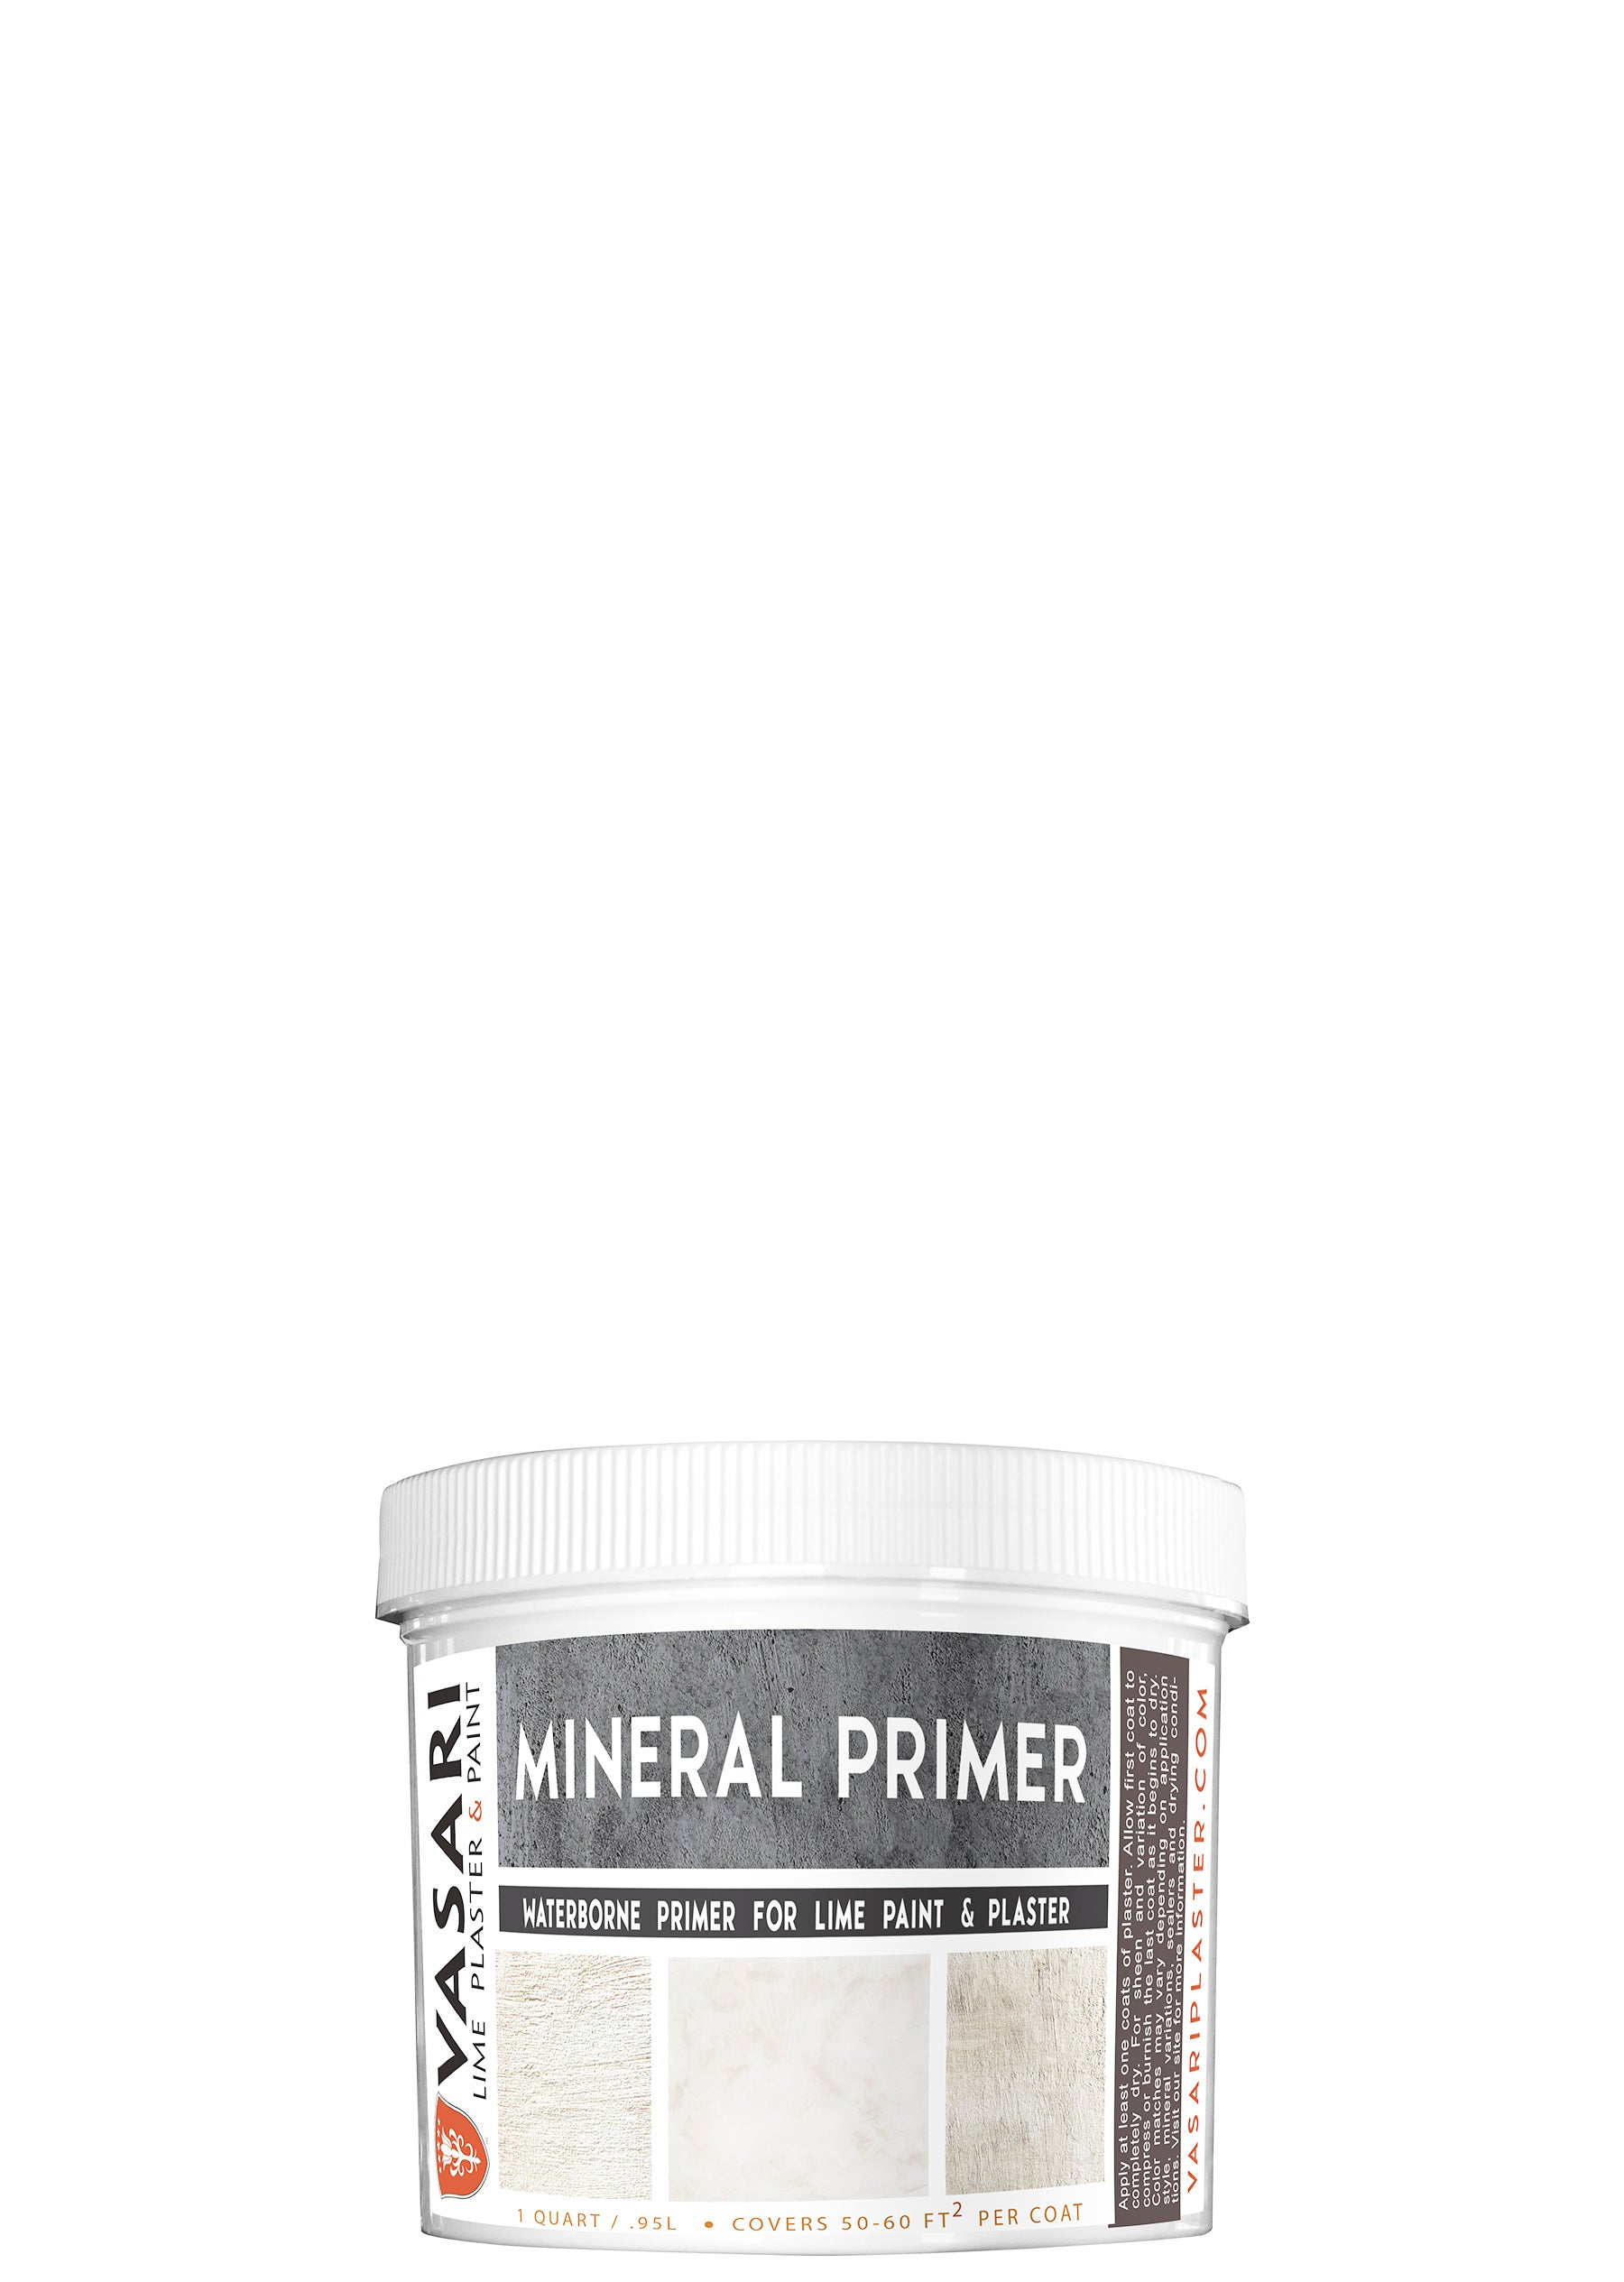 MINERAL PRIMER - 1 QUART